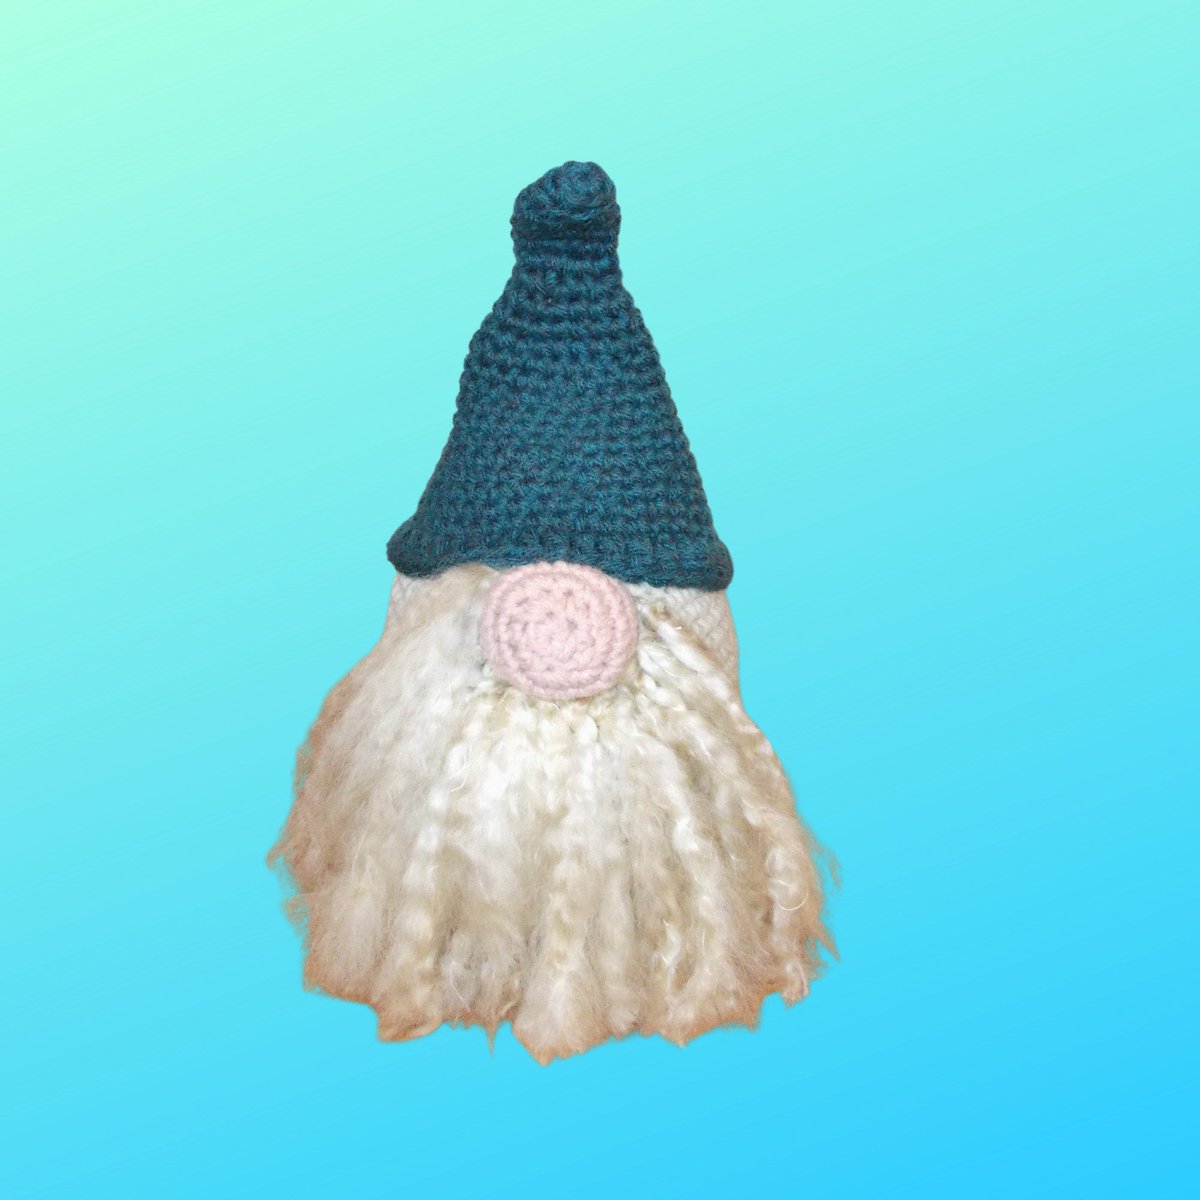 Crocheted Tomte Gnome tuppu.net/84bb6aae #handmadecrochet #crochetpattern #wholesalebuttons #gnome #machineknitbeanie #dryerballs #earsavers #SUNCREATIONSEMPORIUM #cuttingboard #Etsyseller #Handmadegnome